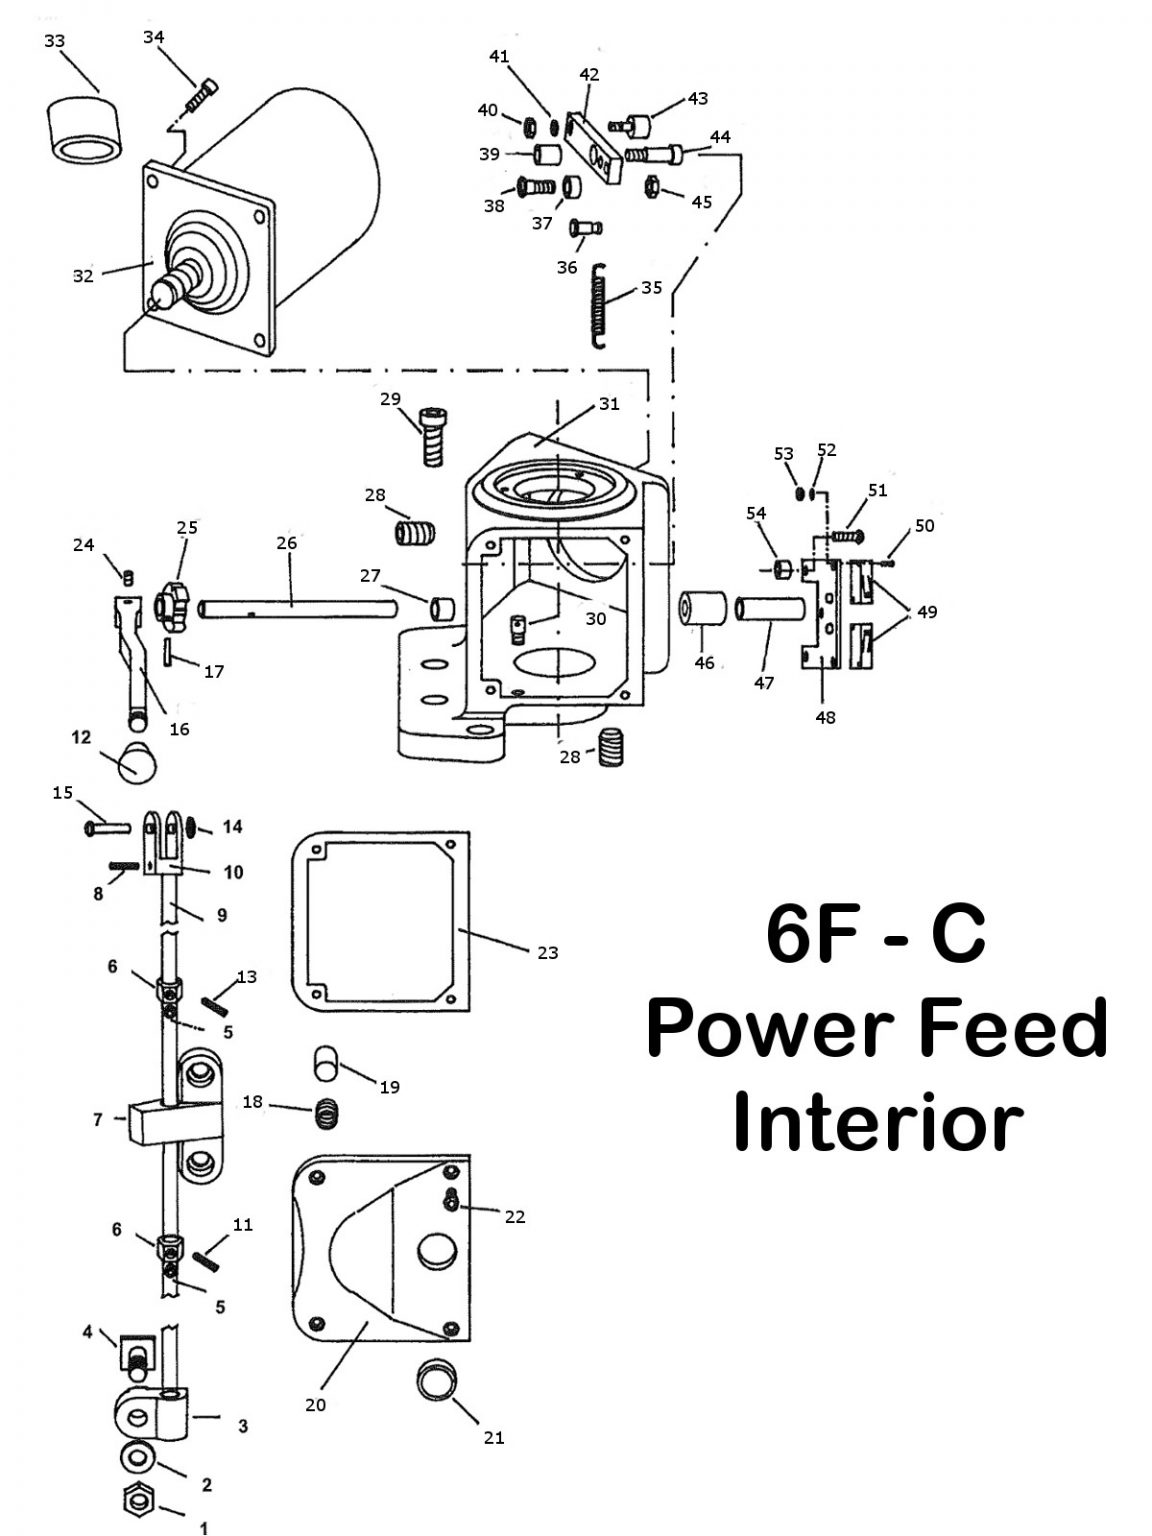 6F-C Power Feed Interior Breakdown